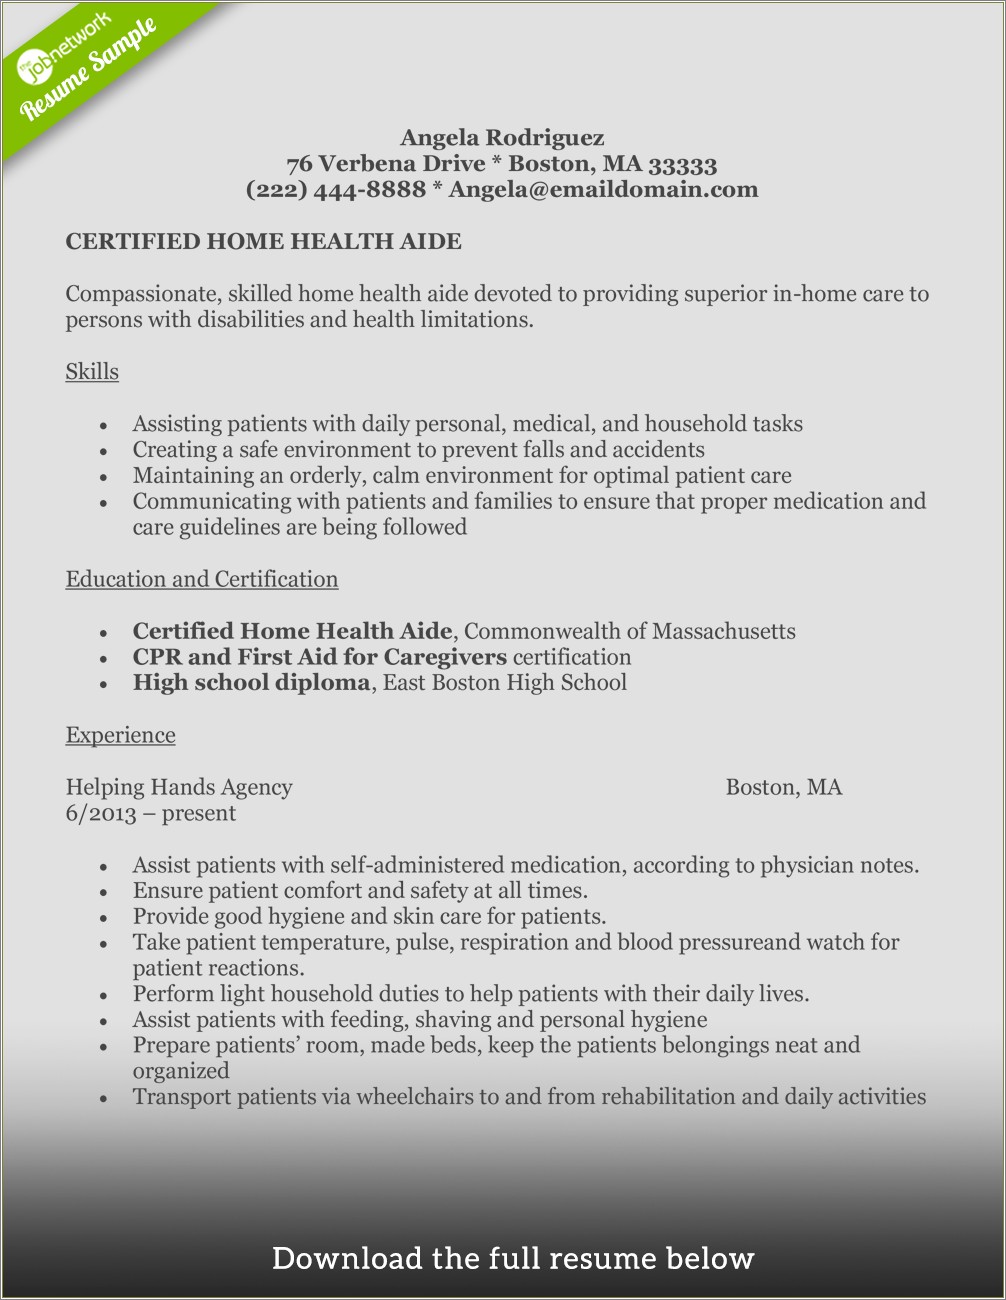 Home Care Job Description Resume Sample